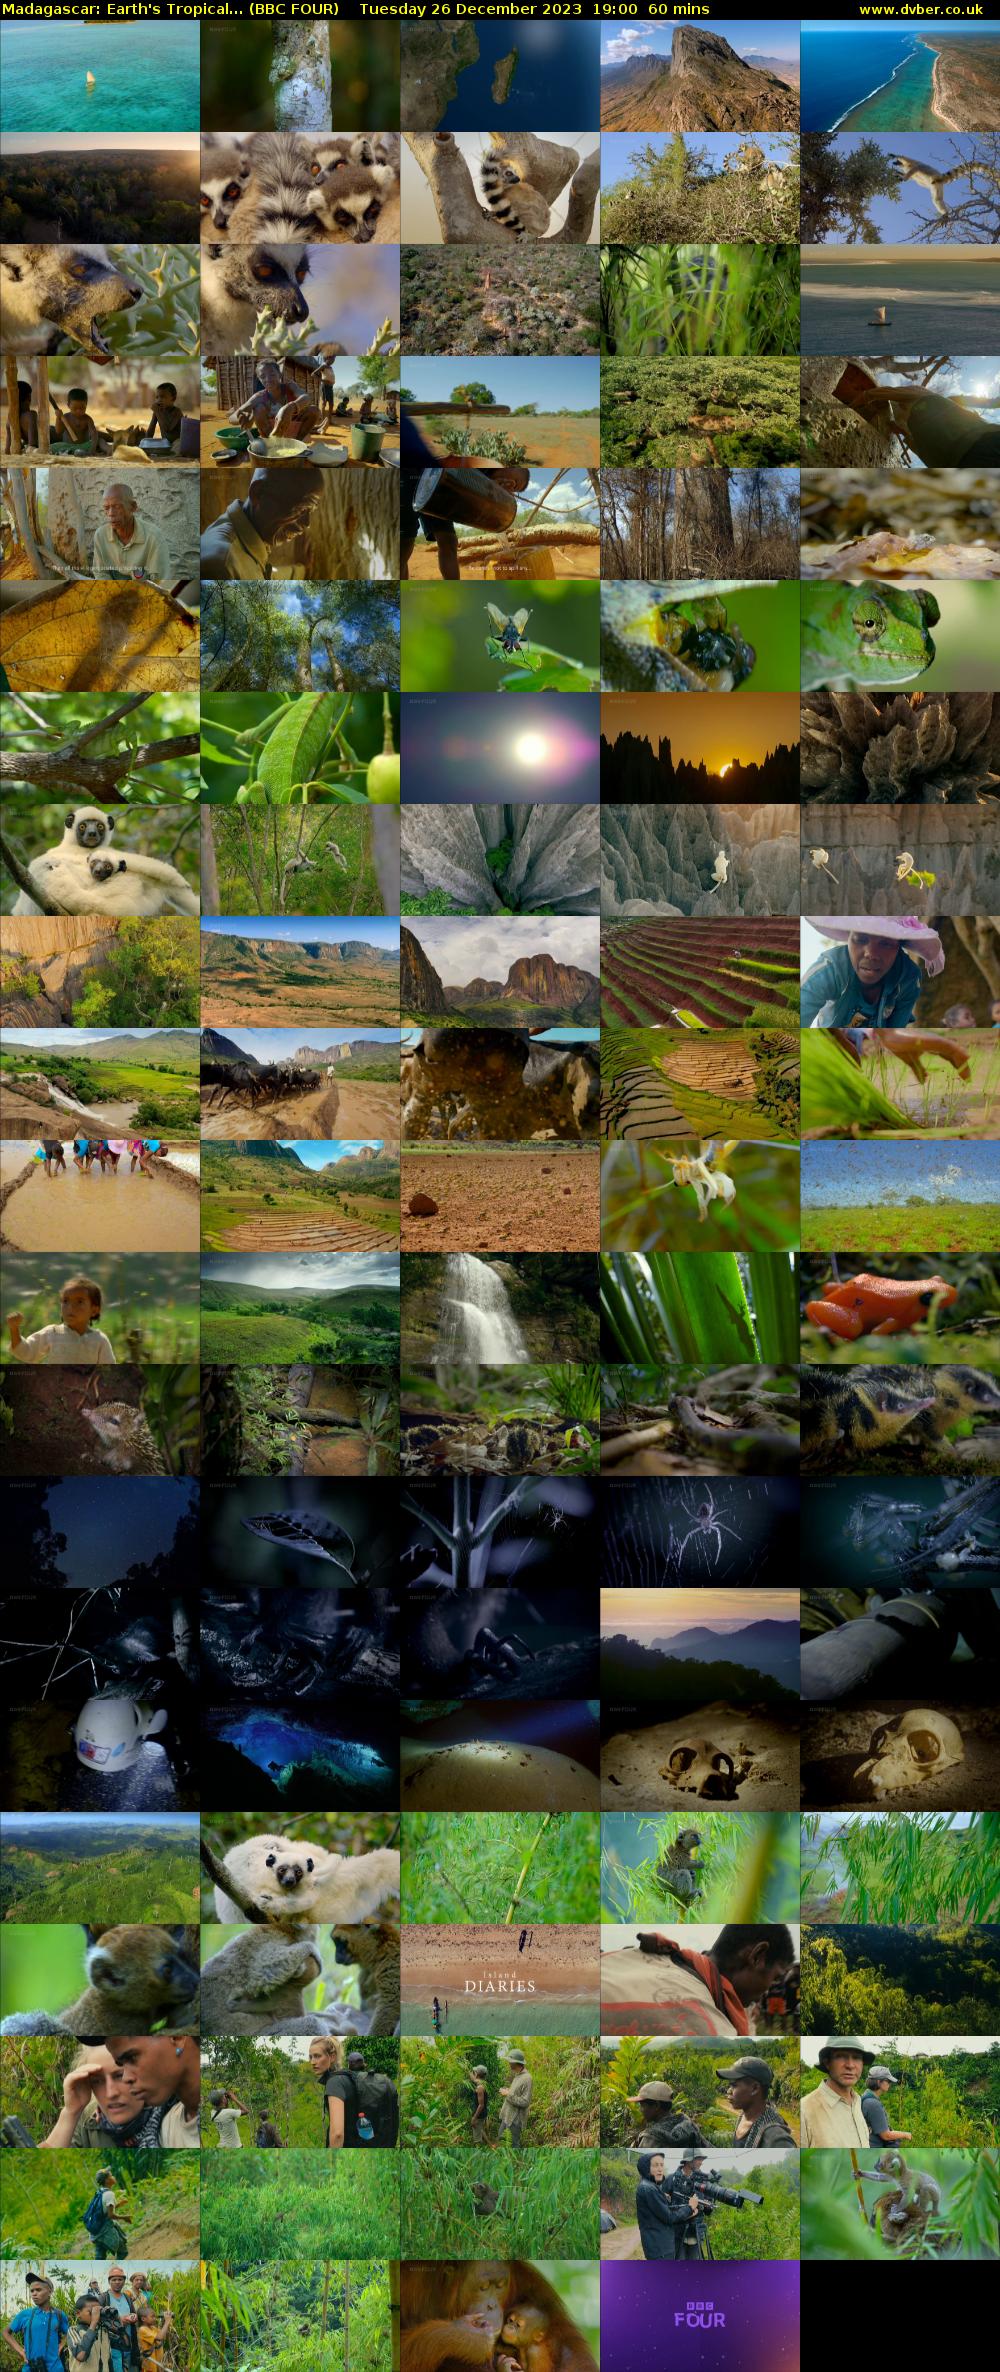 Madagascar: Earth's Tropical... (BBC FOUR) Tuesday 26 December 2023 19:00 - 20:00